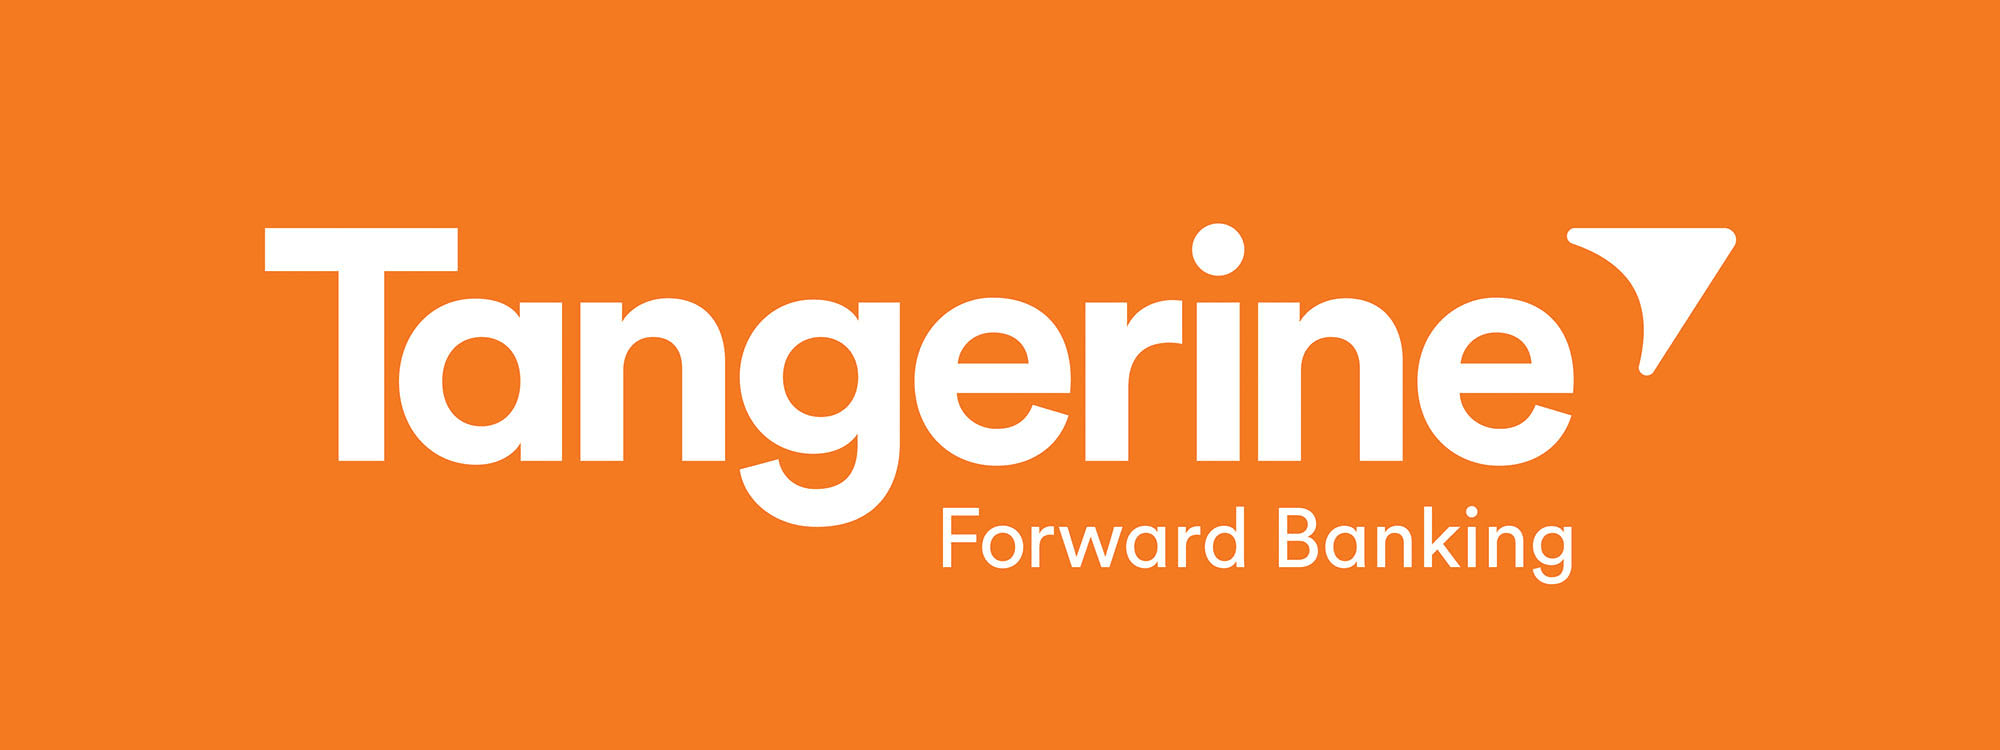 Tangerine Logo - Tangerine Money-Back credit card takes home awards | LowestRates.ca